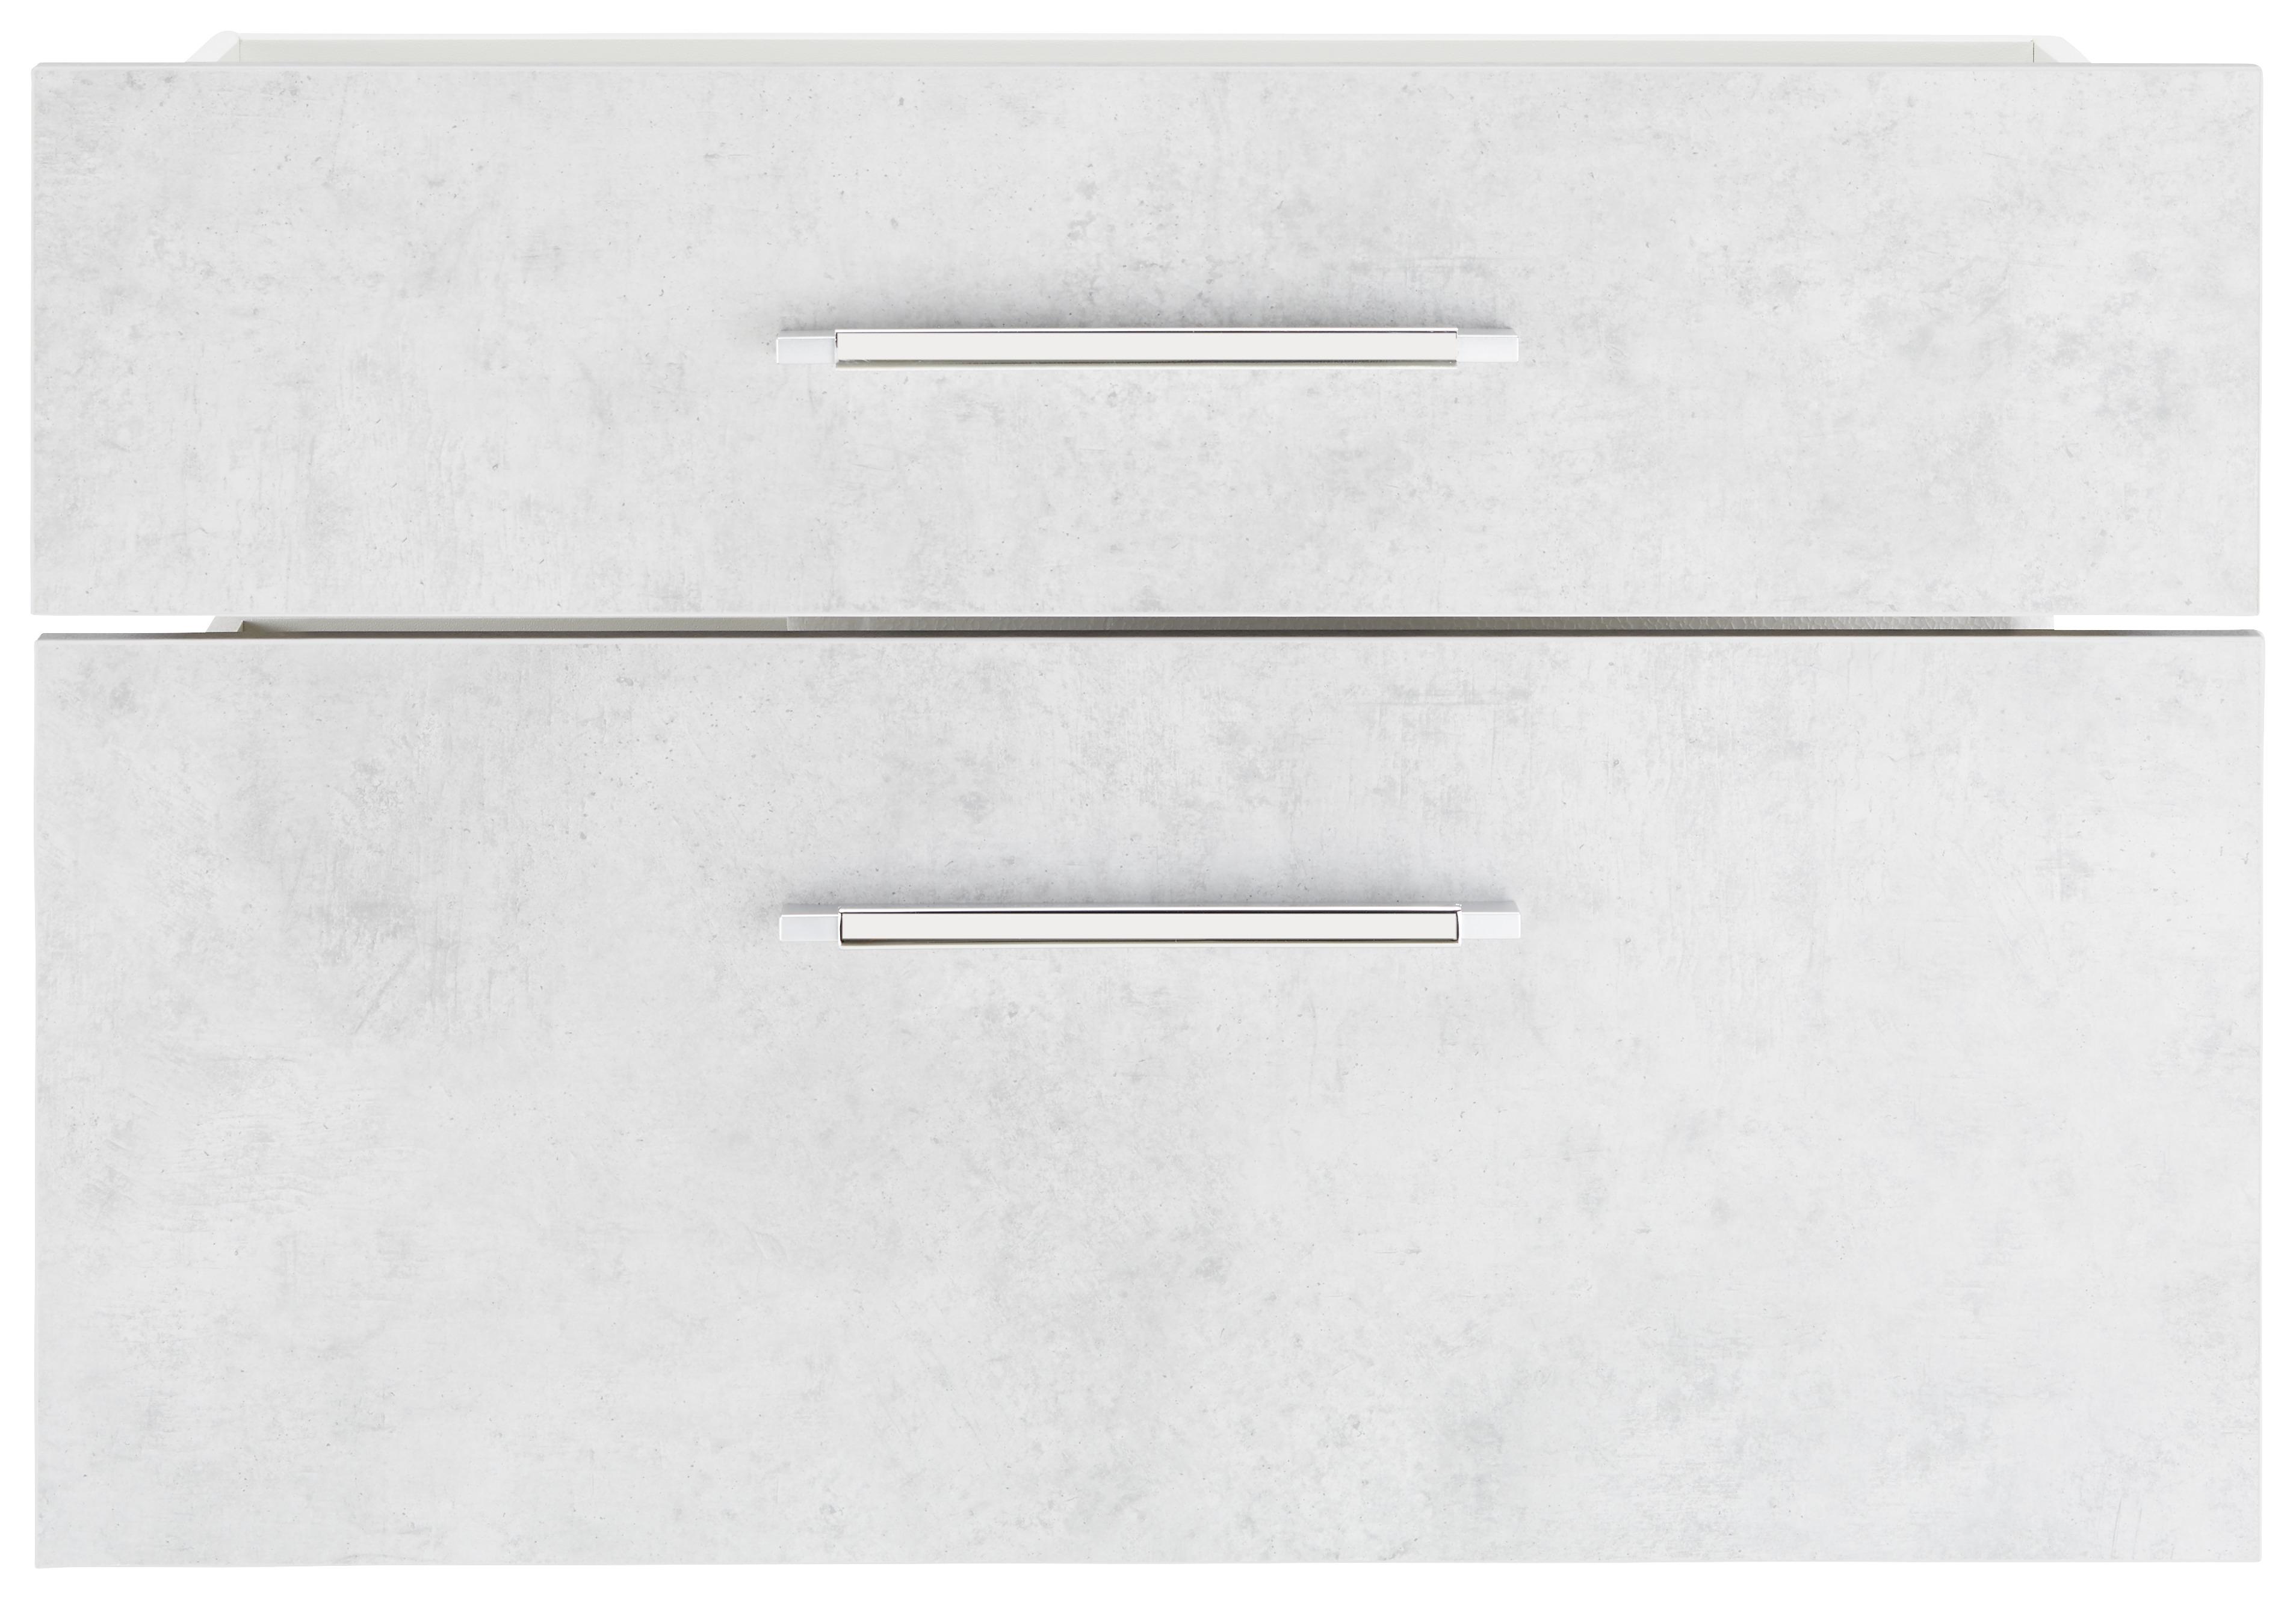 Schubladenset in Grau 2er Set - Alufarben/Grau, MODERN, Holzwerkstoff/Metall (76/51,4/39cm) - Modern Living